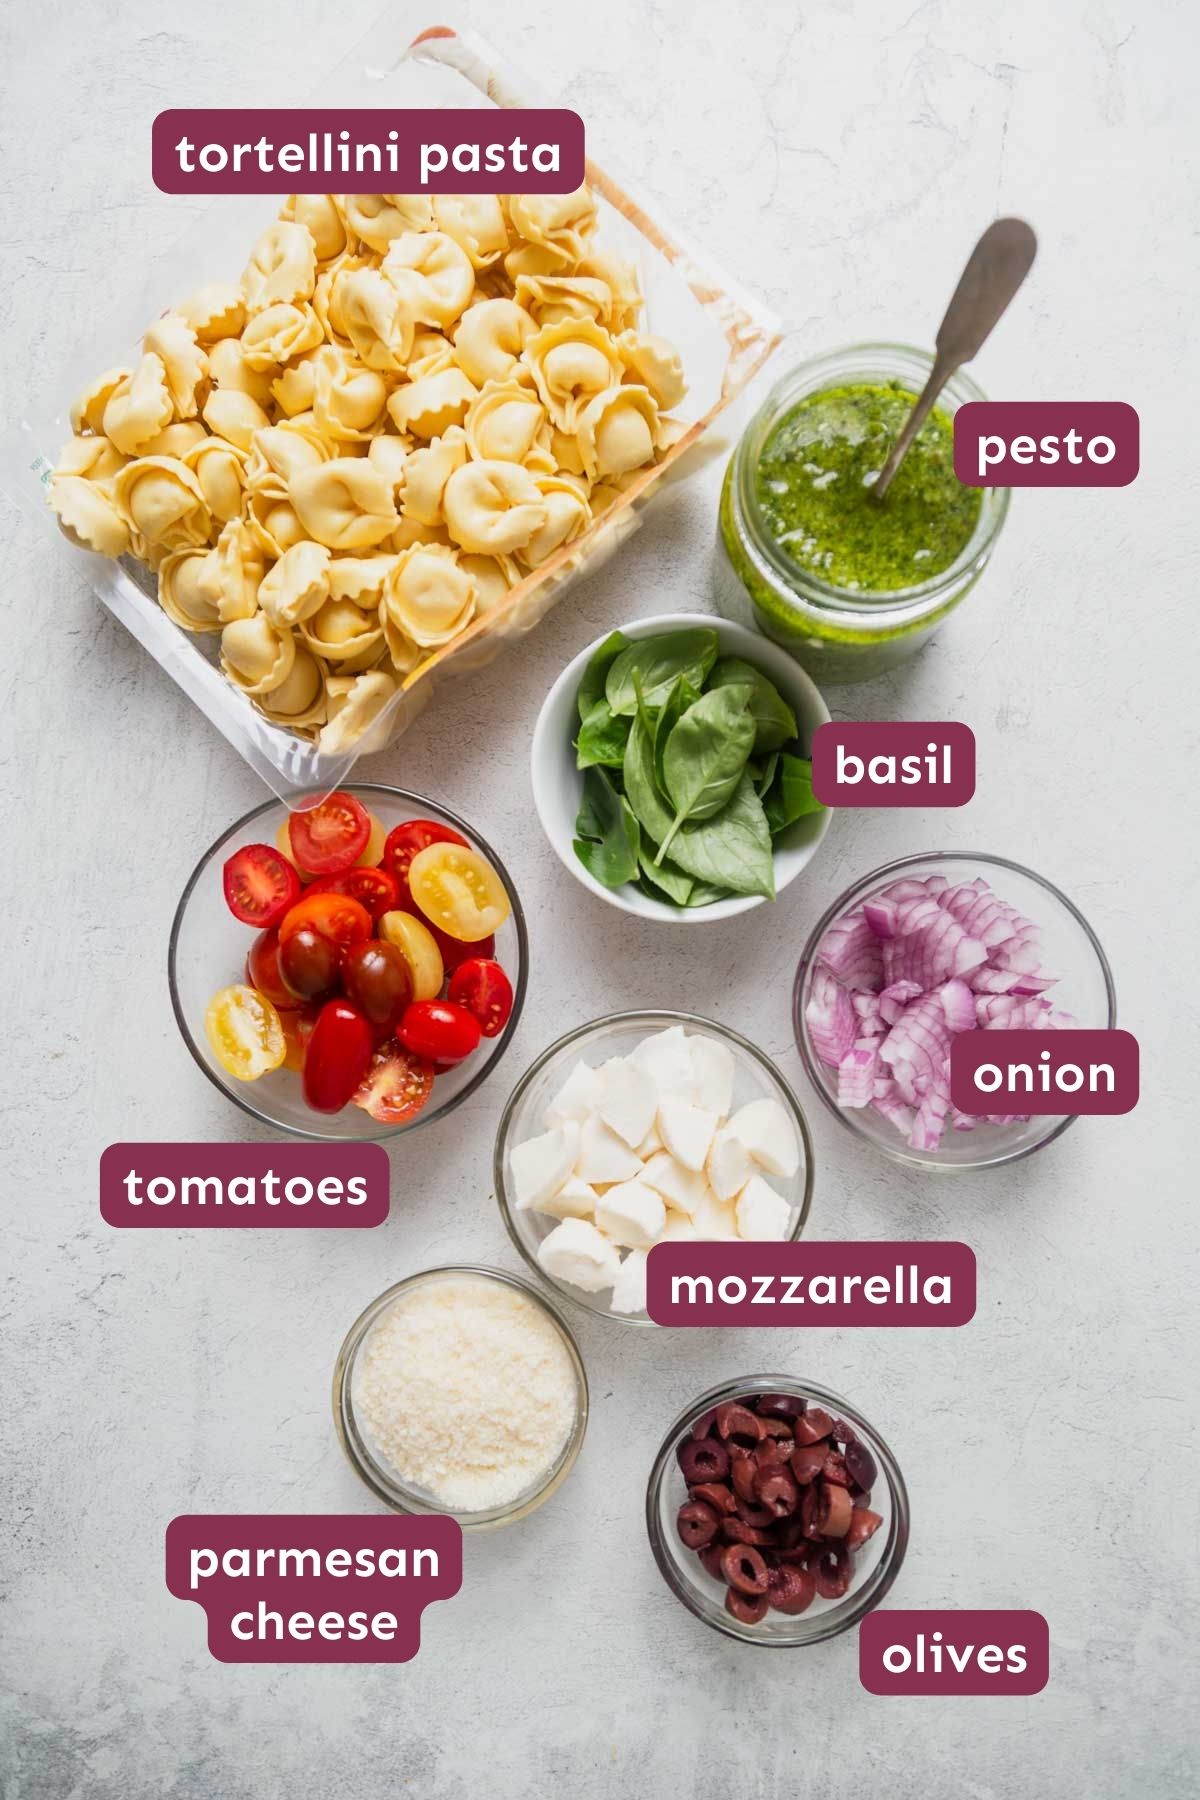 ingredients for pesto tortellini salad.